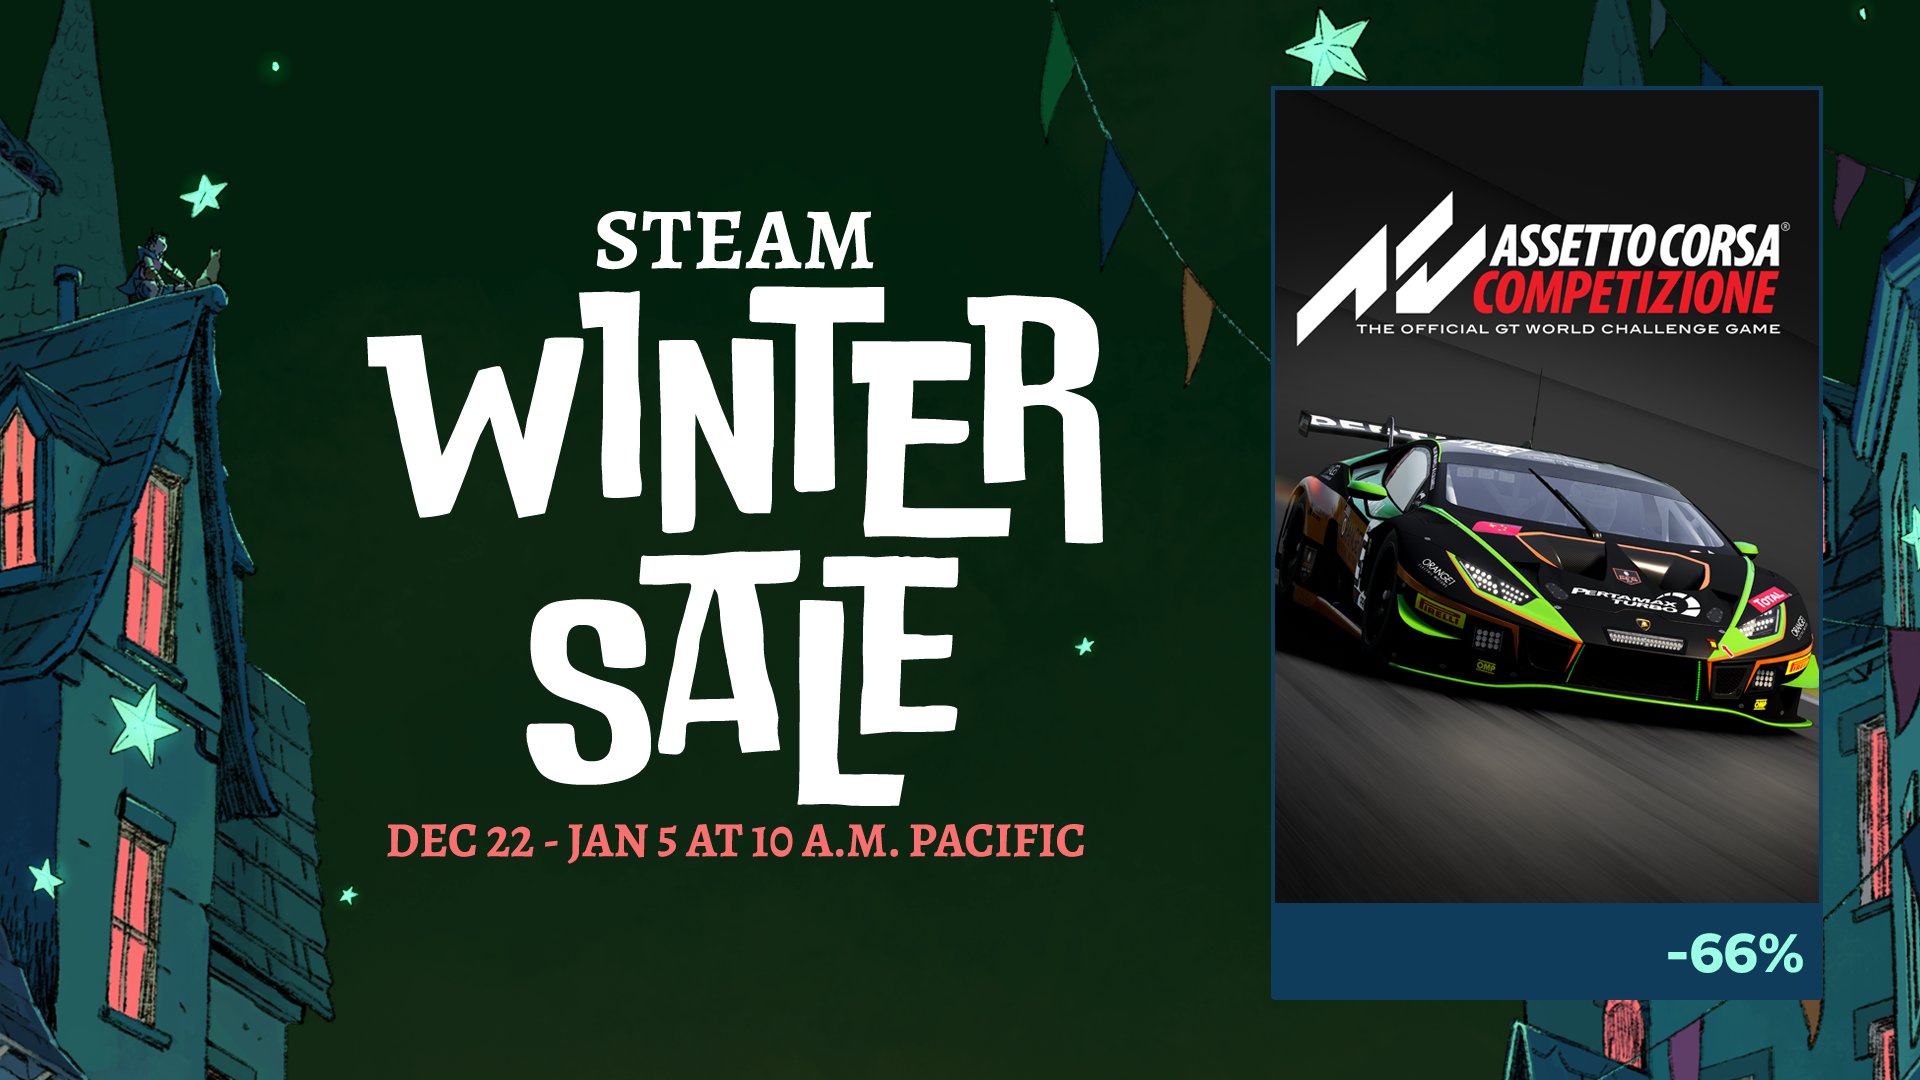 More information about "Partiti i saldi invernali di Steam, sconti su simracing e racing games"